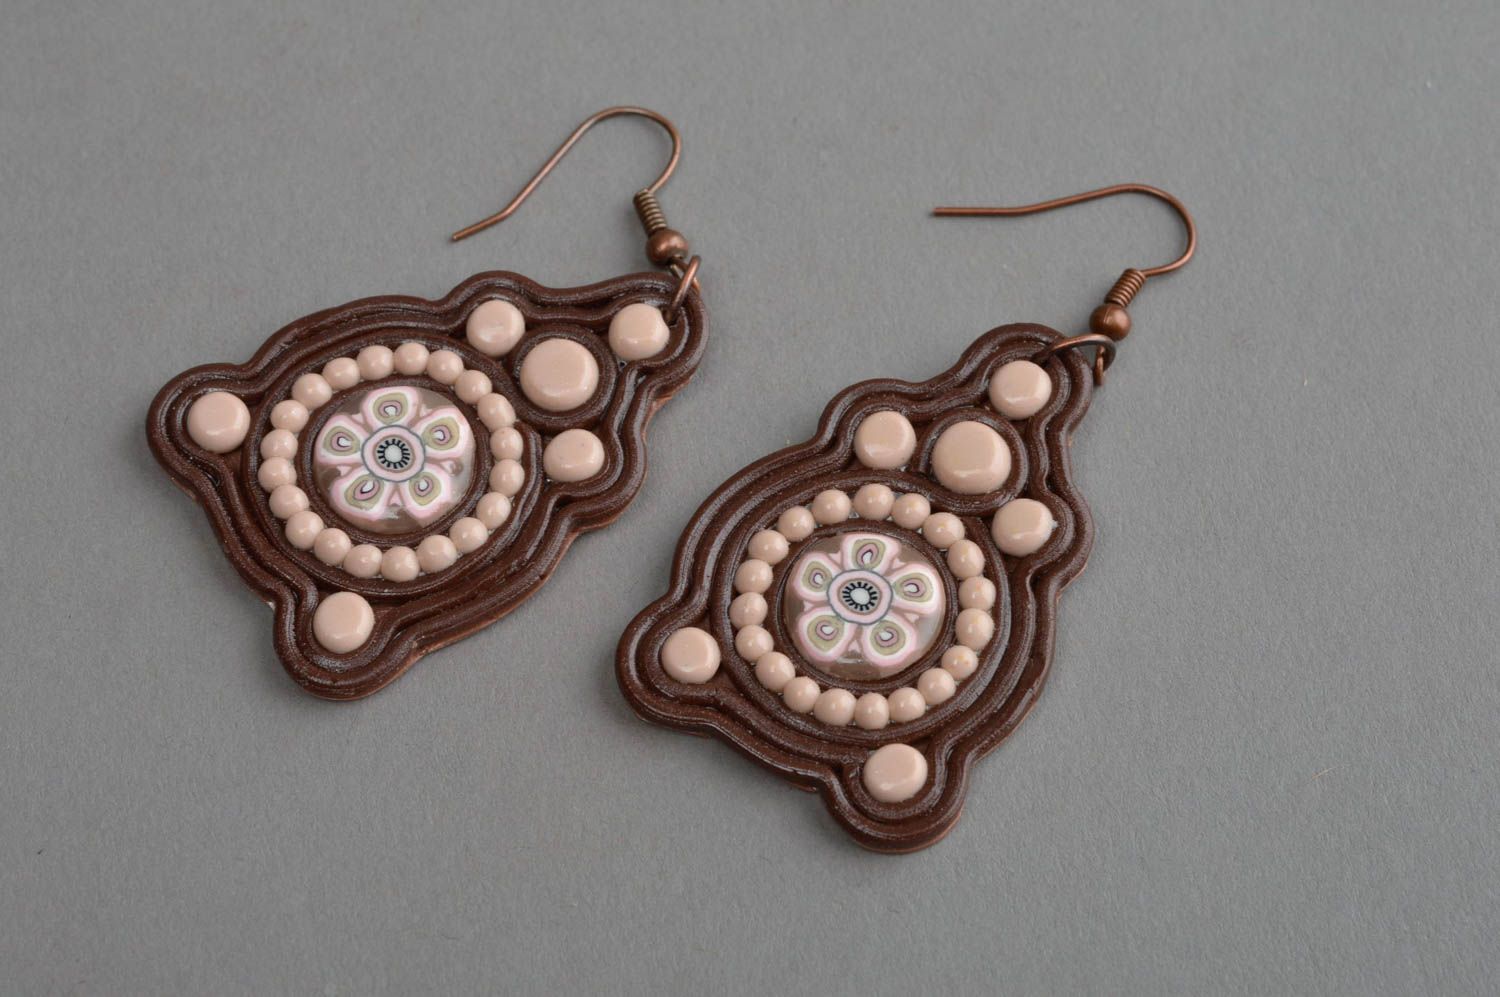 Handmade earrings with charms polymer clay earrings soutache earrings for women photo 2